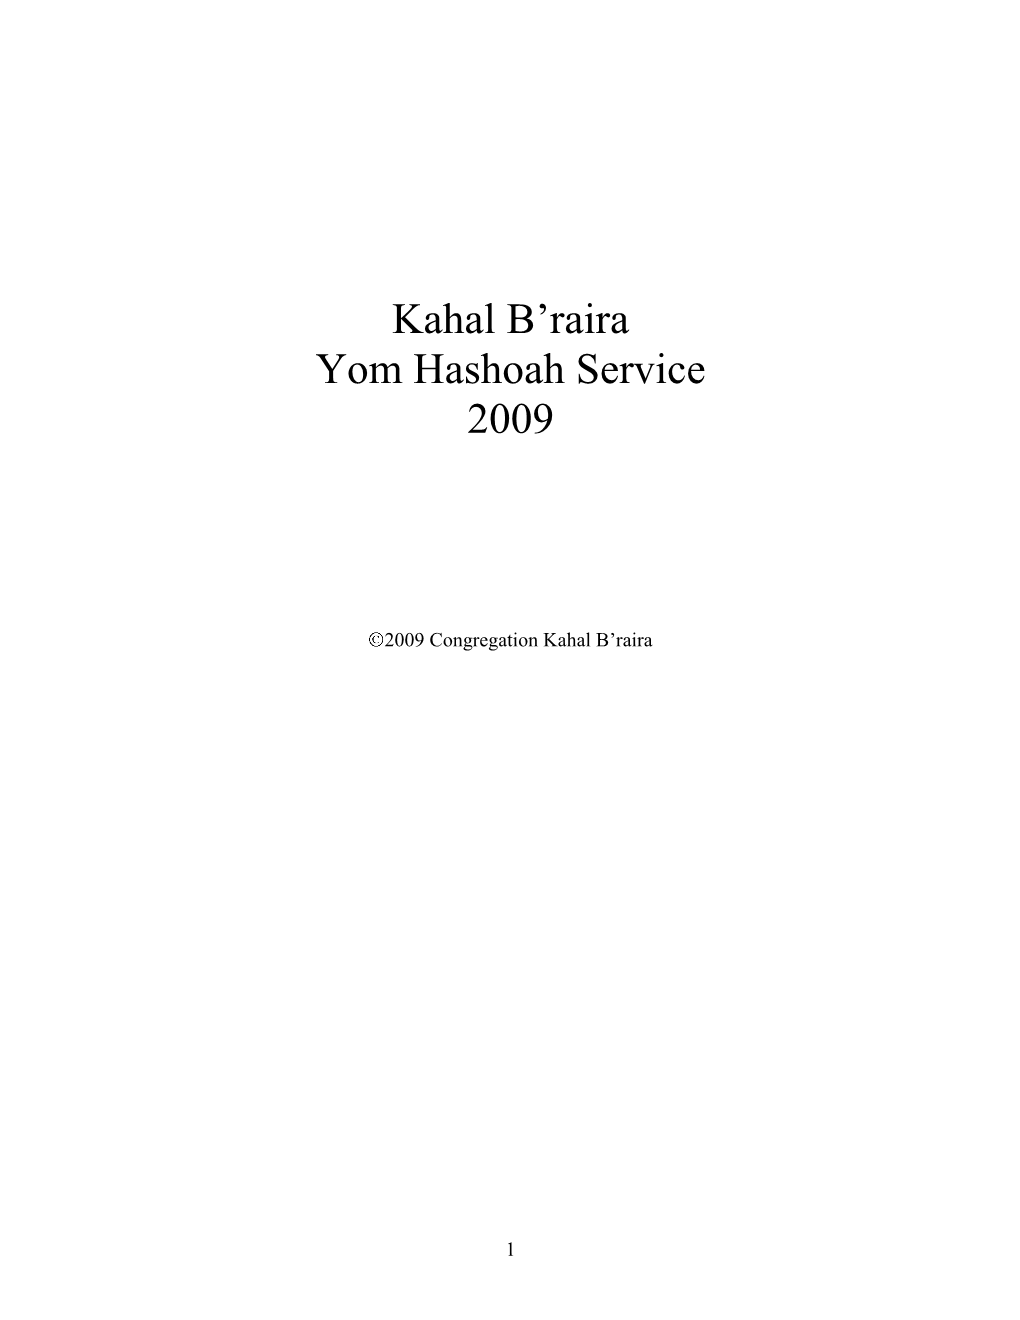 Yom Hashoah Service 2009